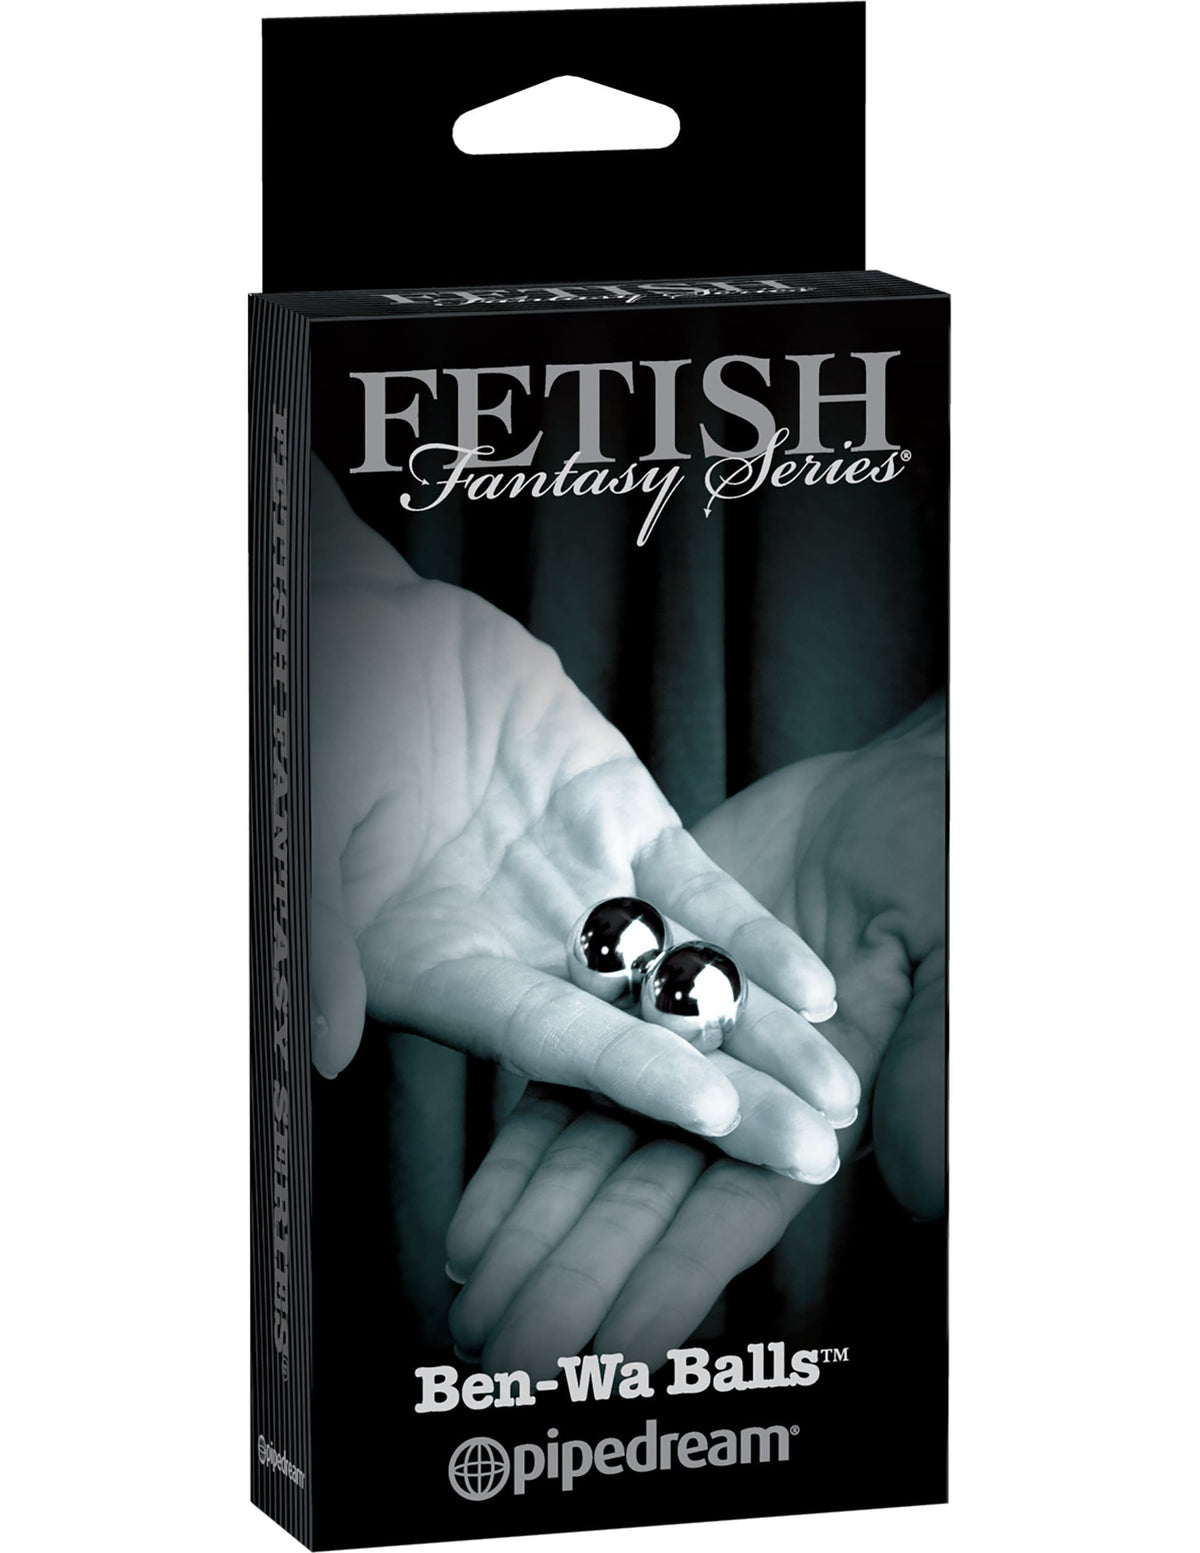 fetish fantasy series ltd ed ben wa balls